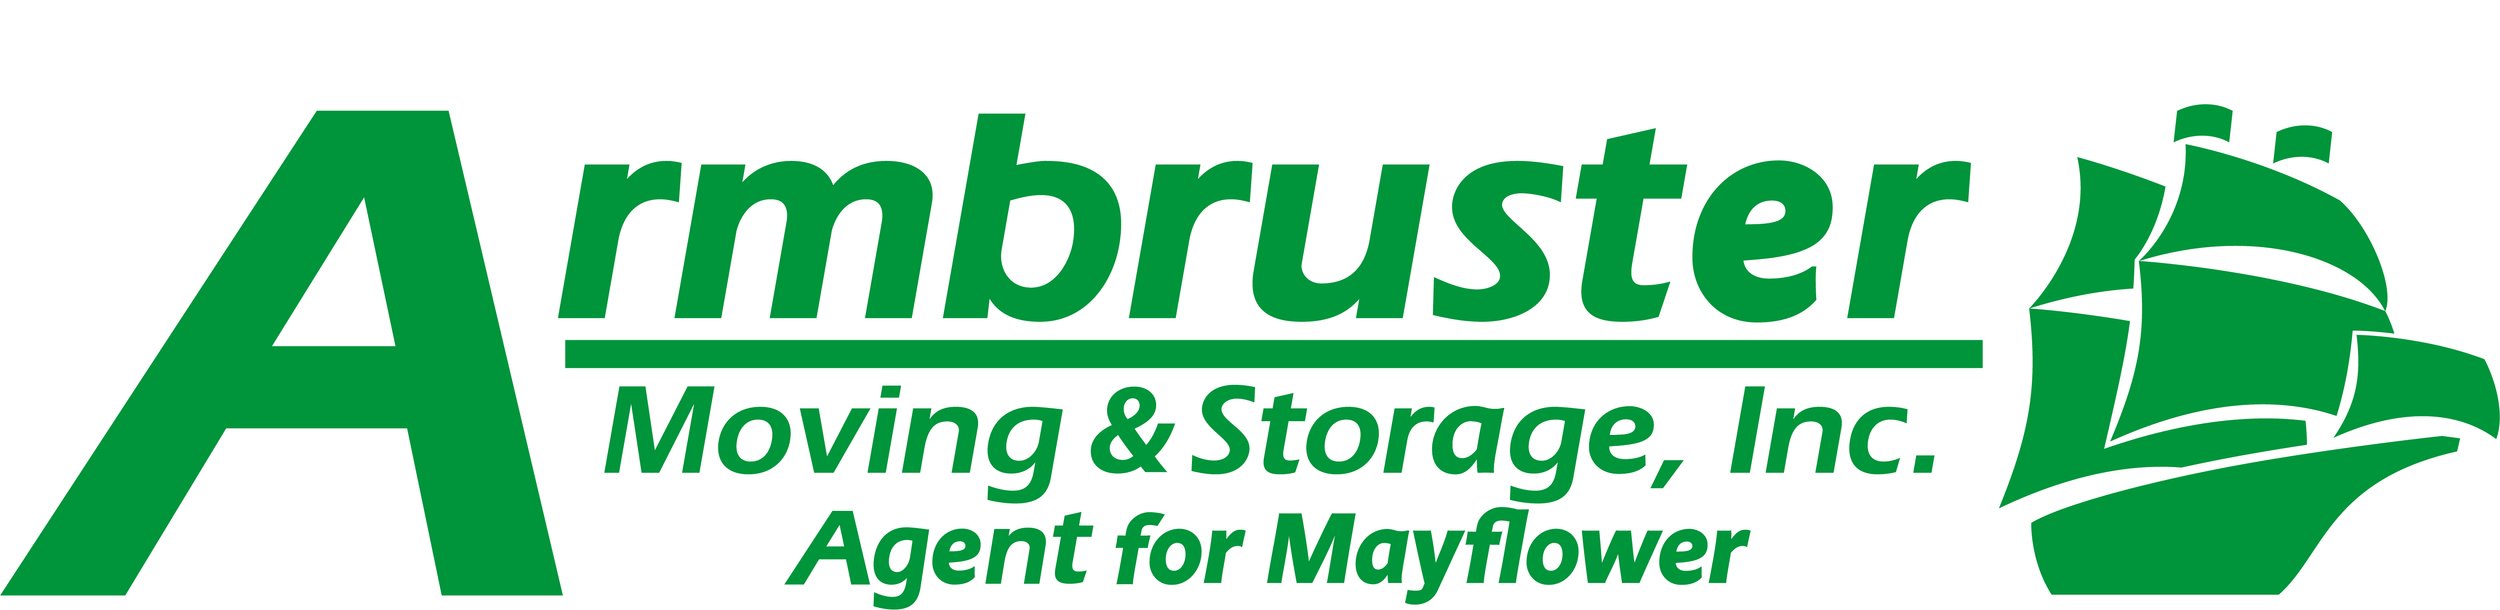 Armbruster Logo - Green.jpg